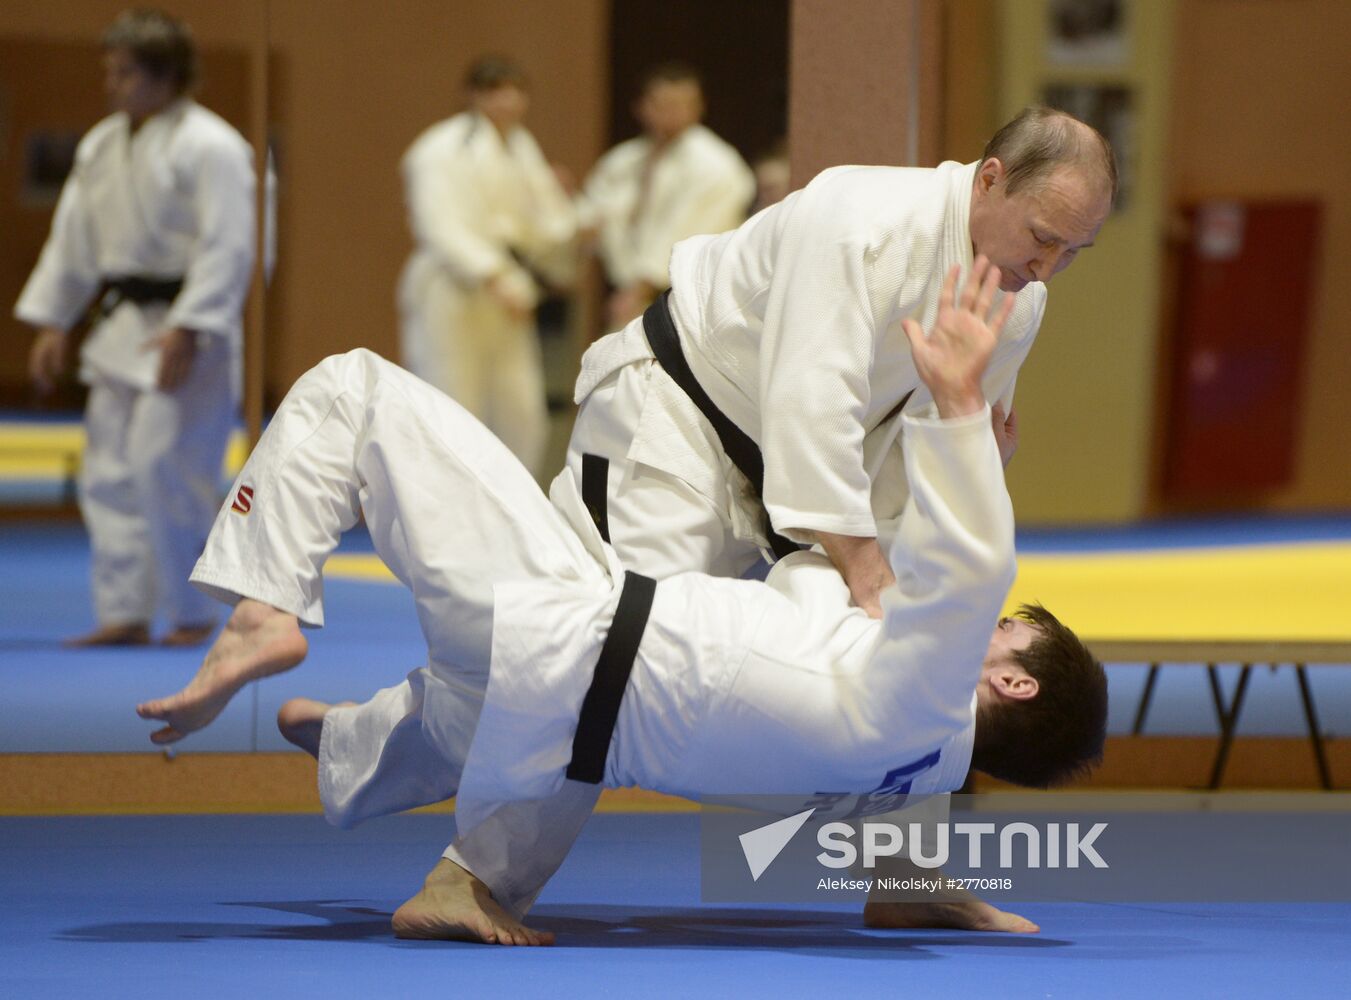 President Vladimir Putin meets with Russian judo national team members